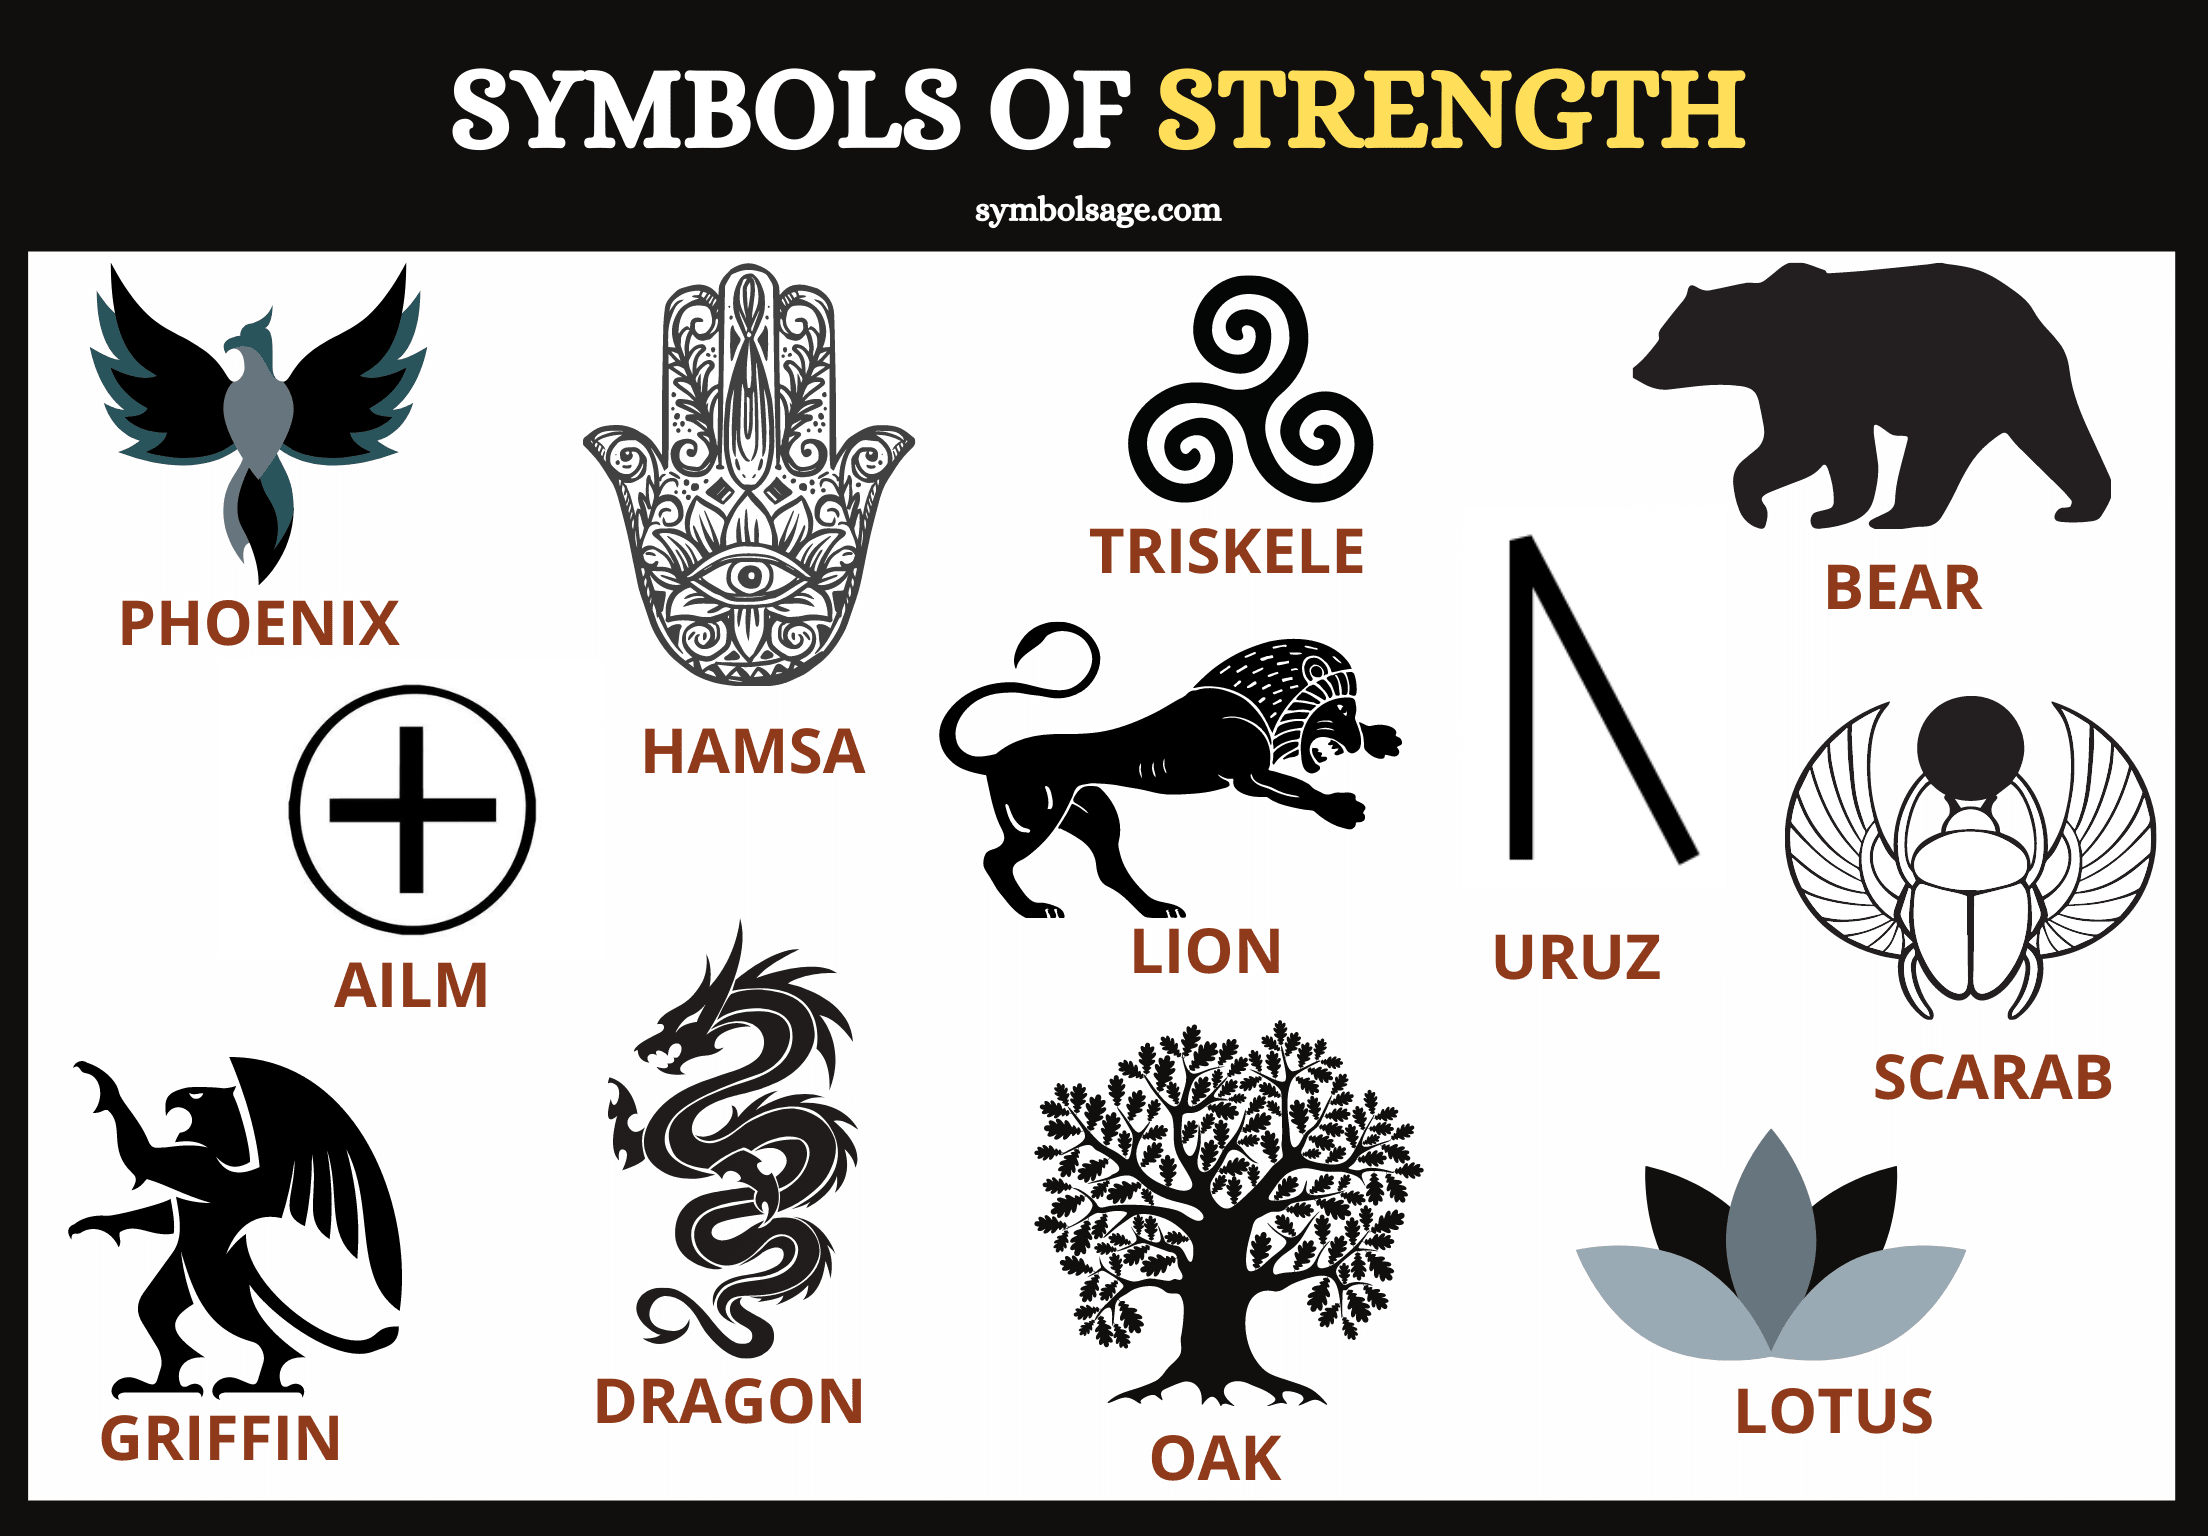 Symbols of strength list